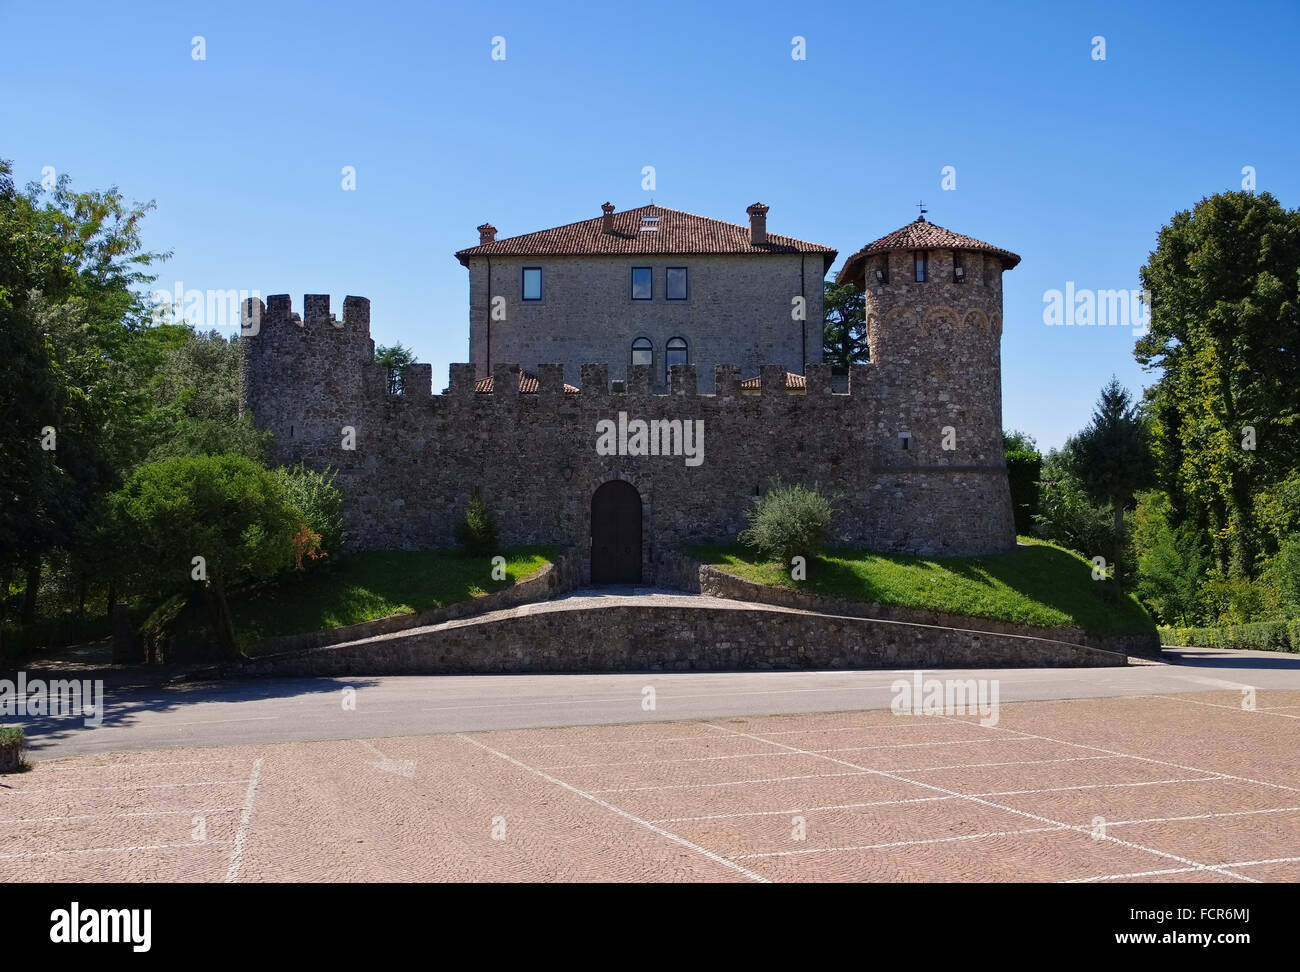 Tricesimo in Italienisch, Burg - Tricesimo in Italien, das Schloss Stockfoto